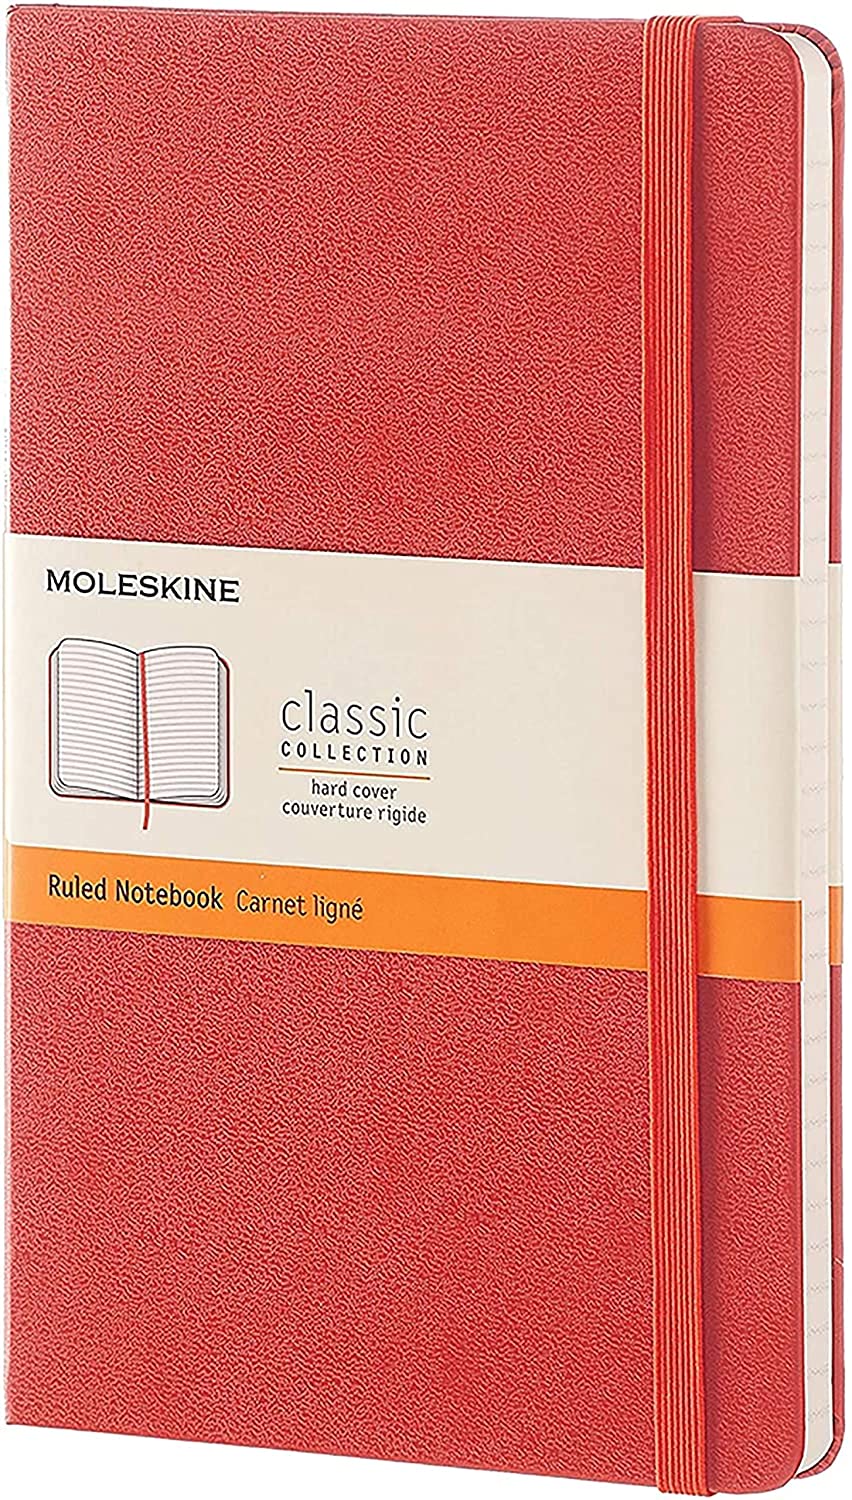 Moleskine Hardcover Notebook - Ruled